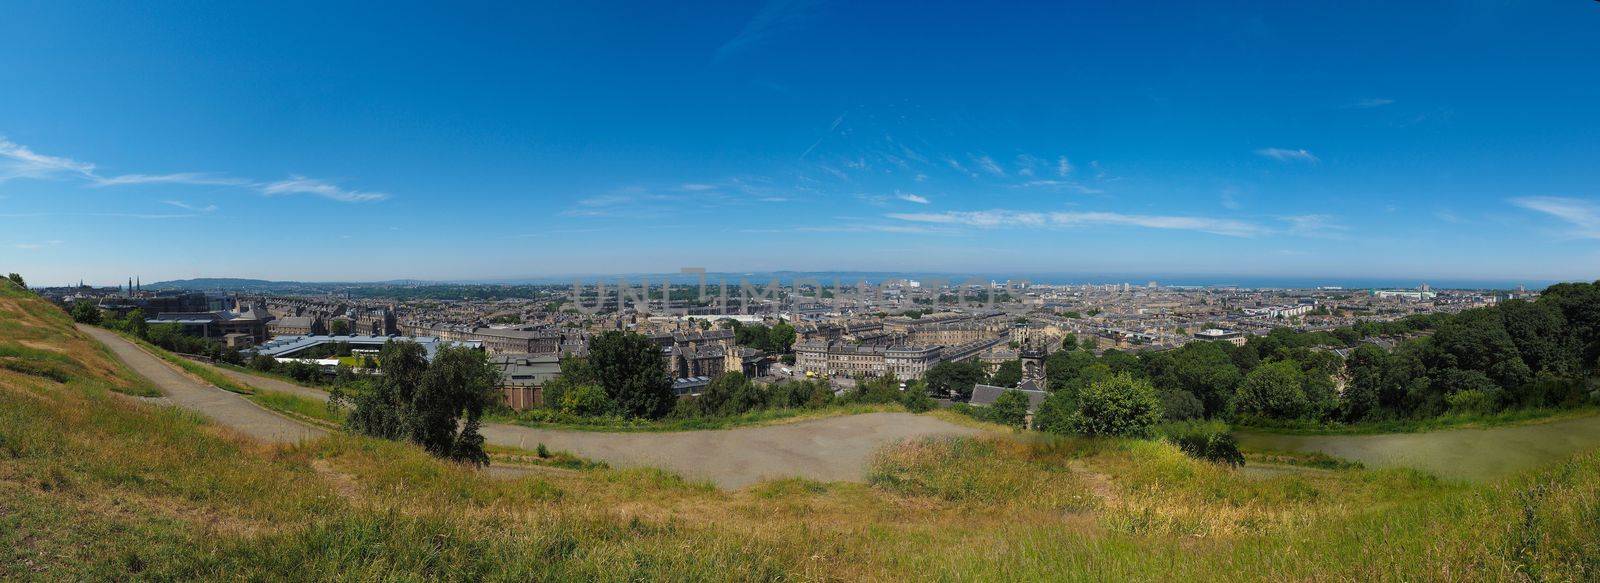 Aerial view of Edinburgh by claudiodivizia